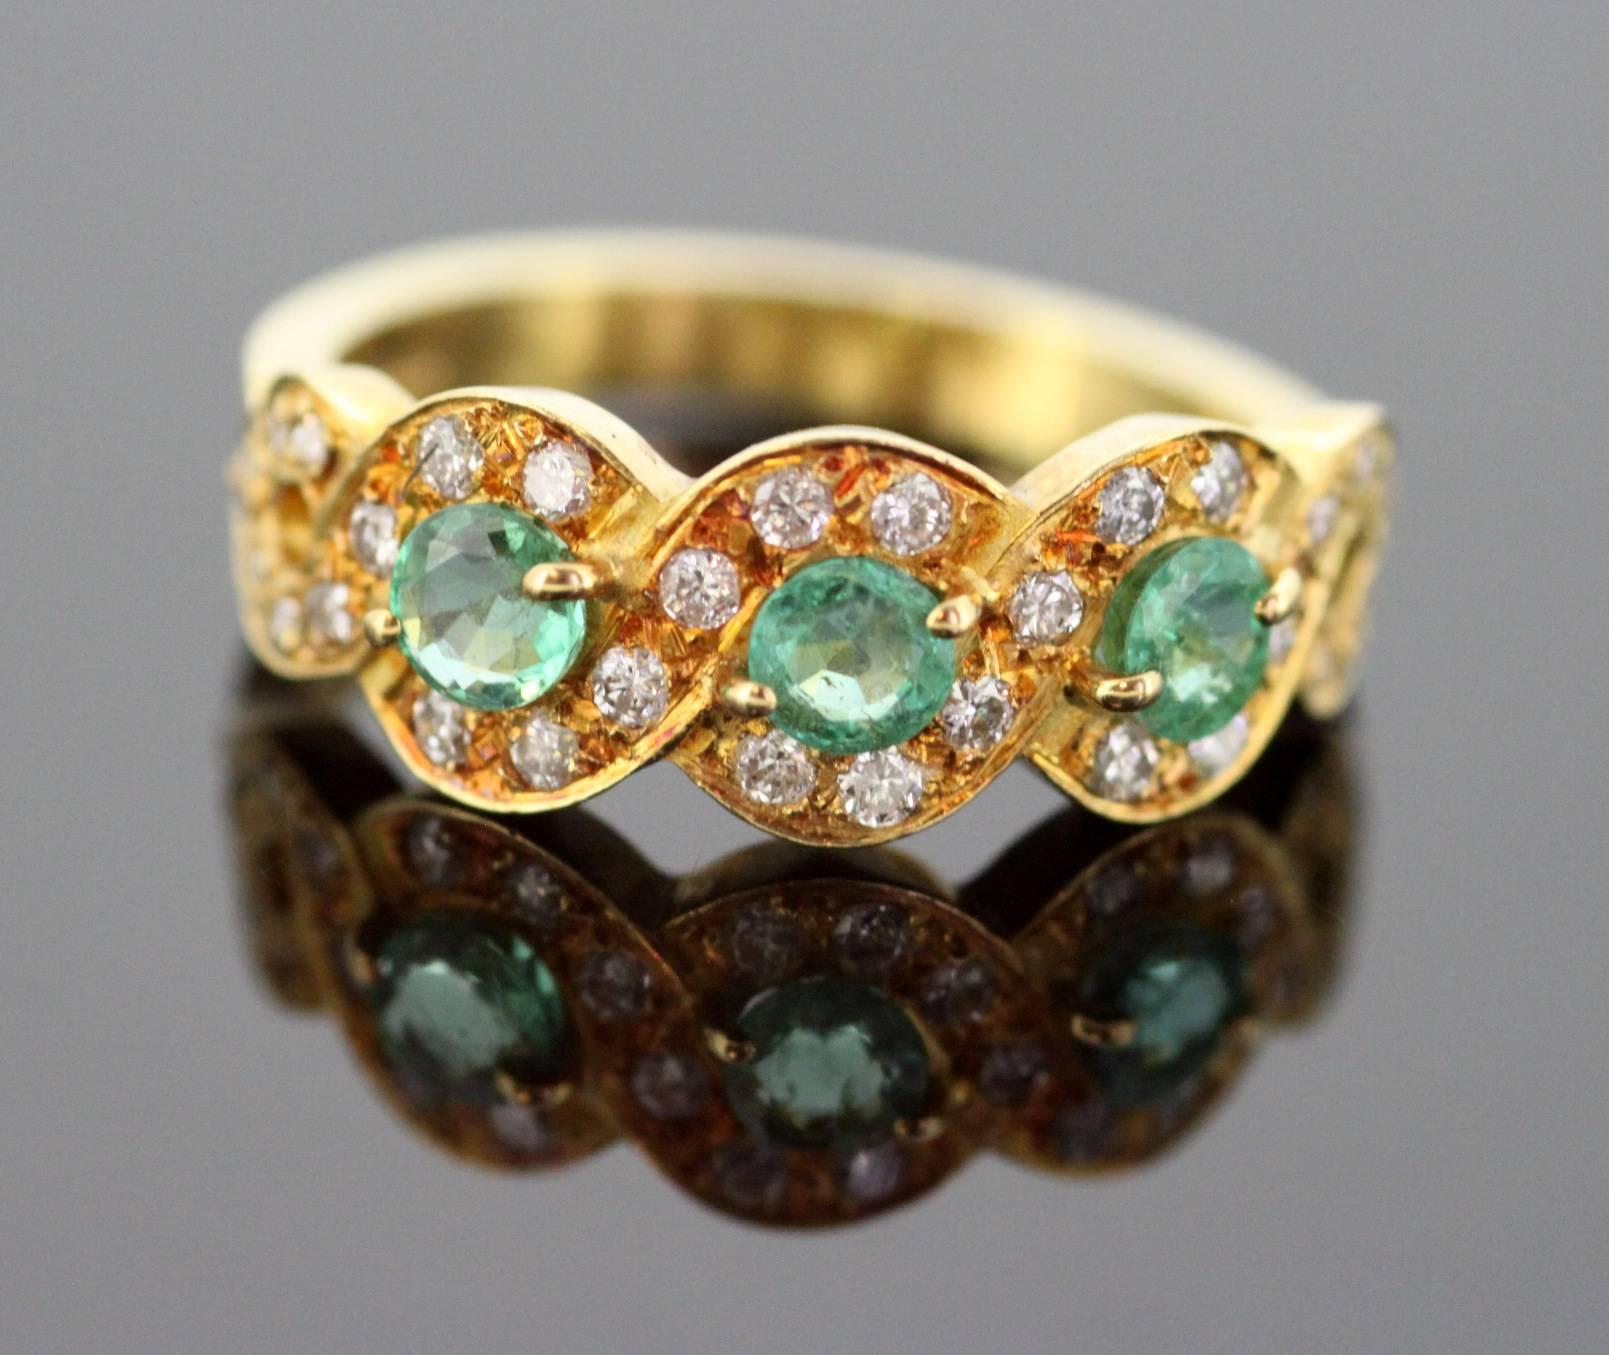 18 Karat Yellow Gold Ladies Ring with Emerald and Diamonds 2